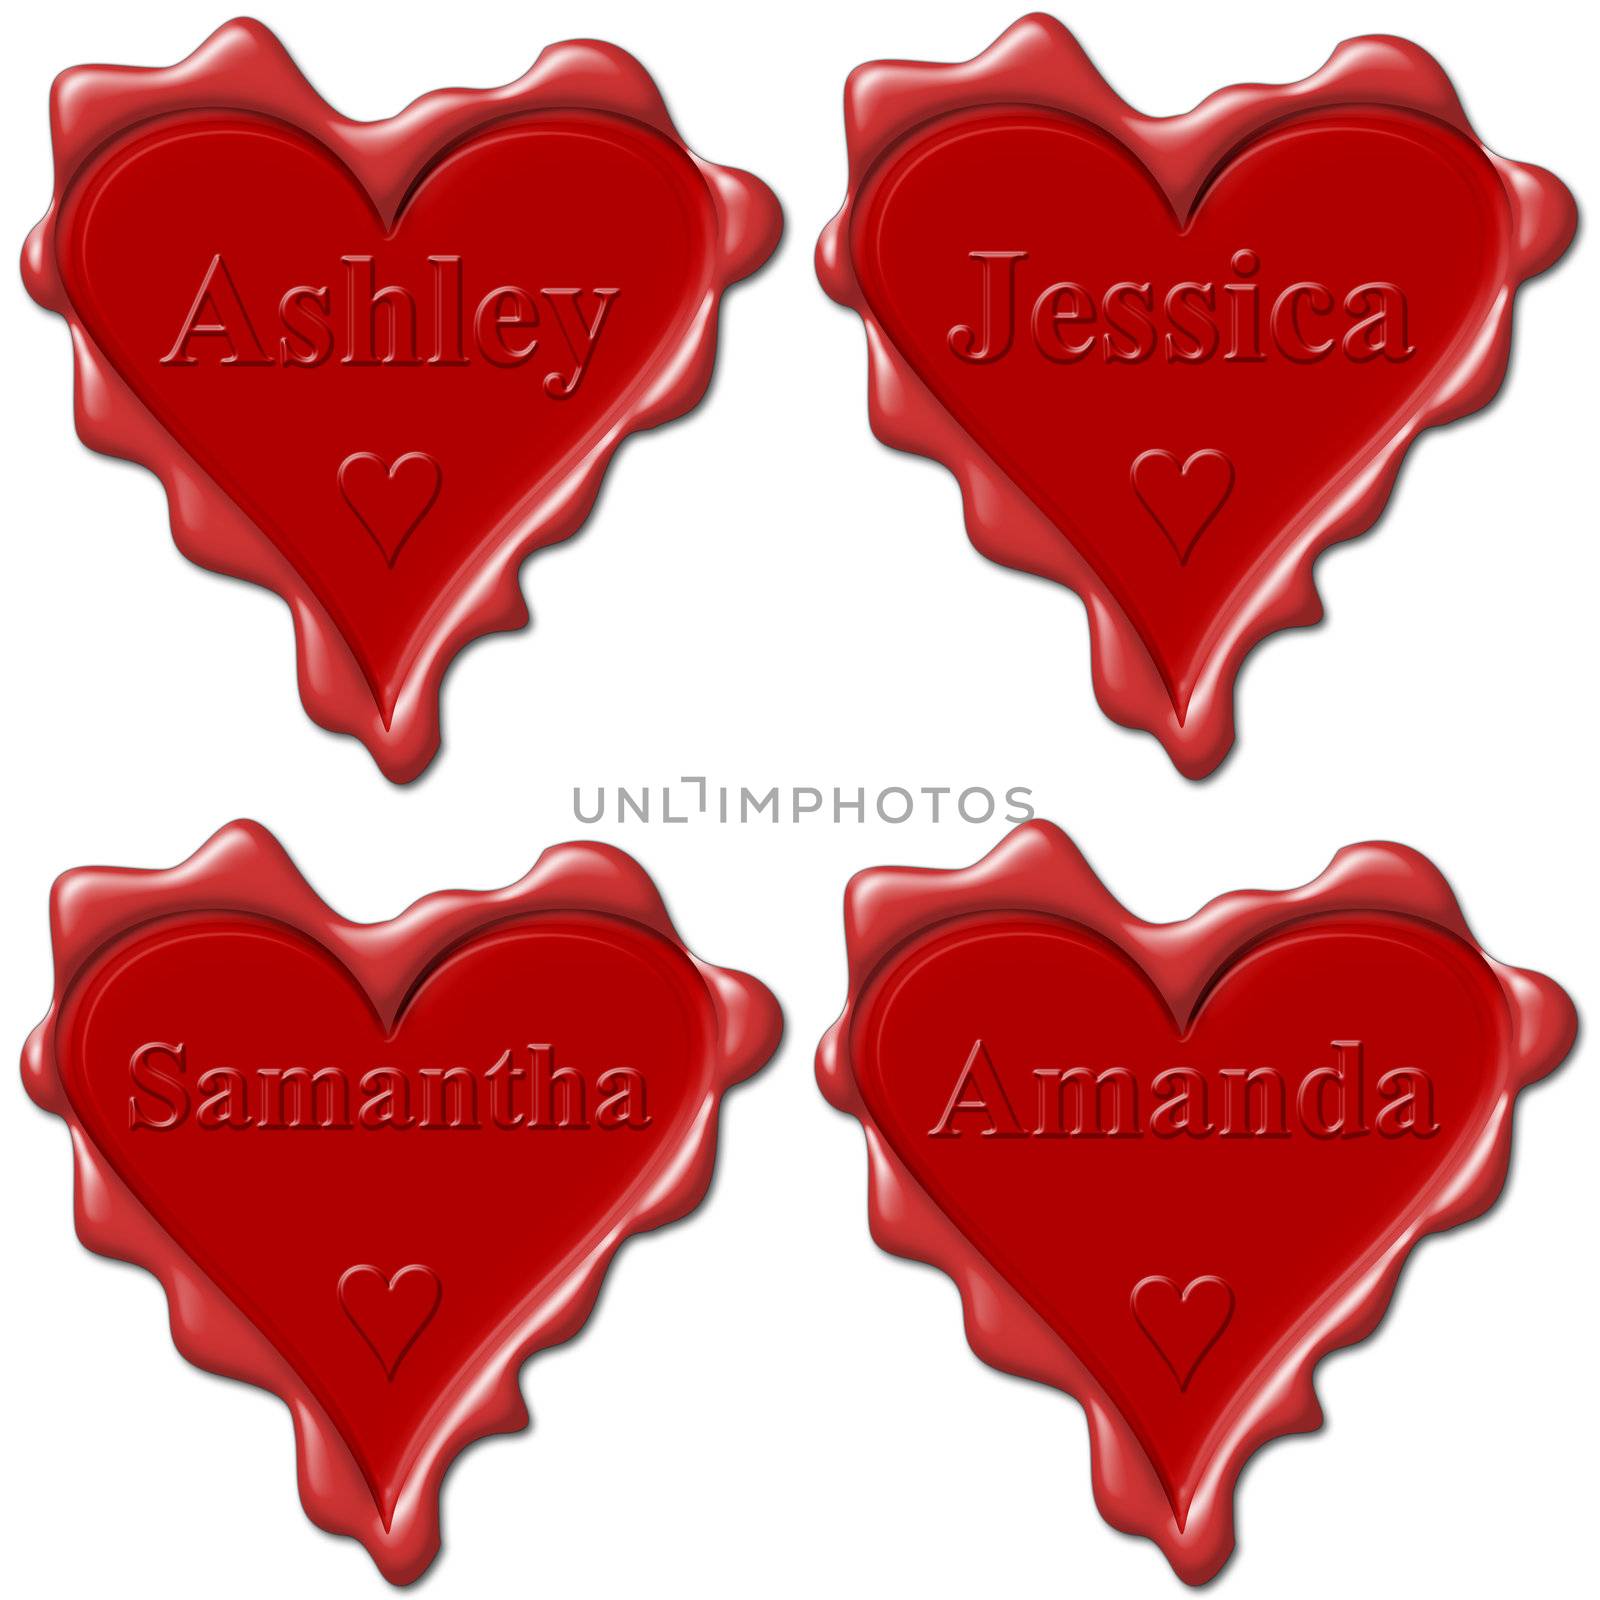 Valentine love hearts with names: Ashley, Jessica, Samantha, Ama by mozzyb